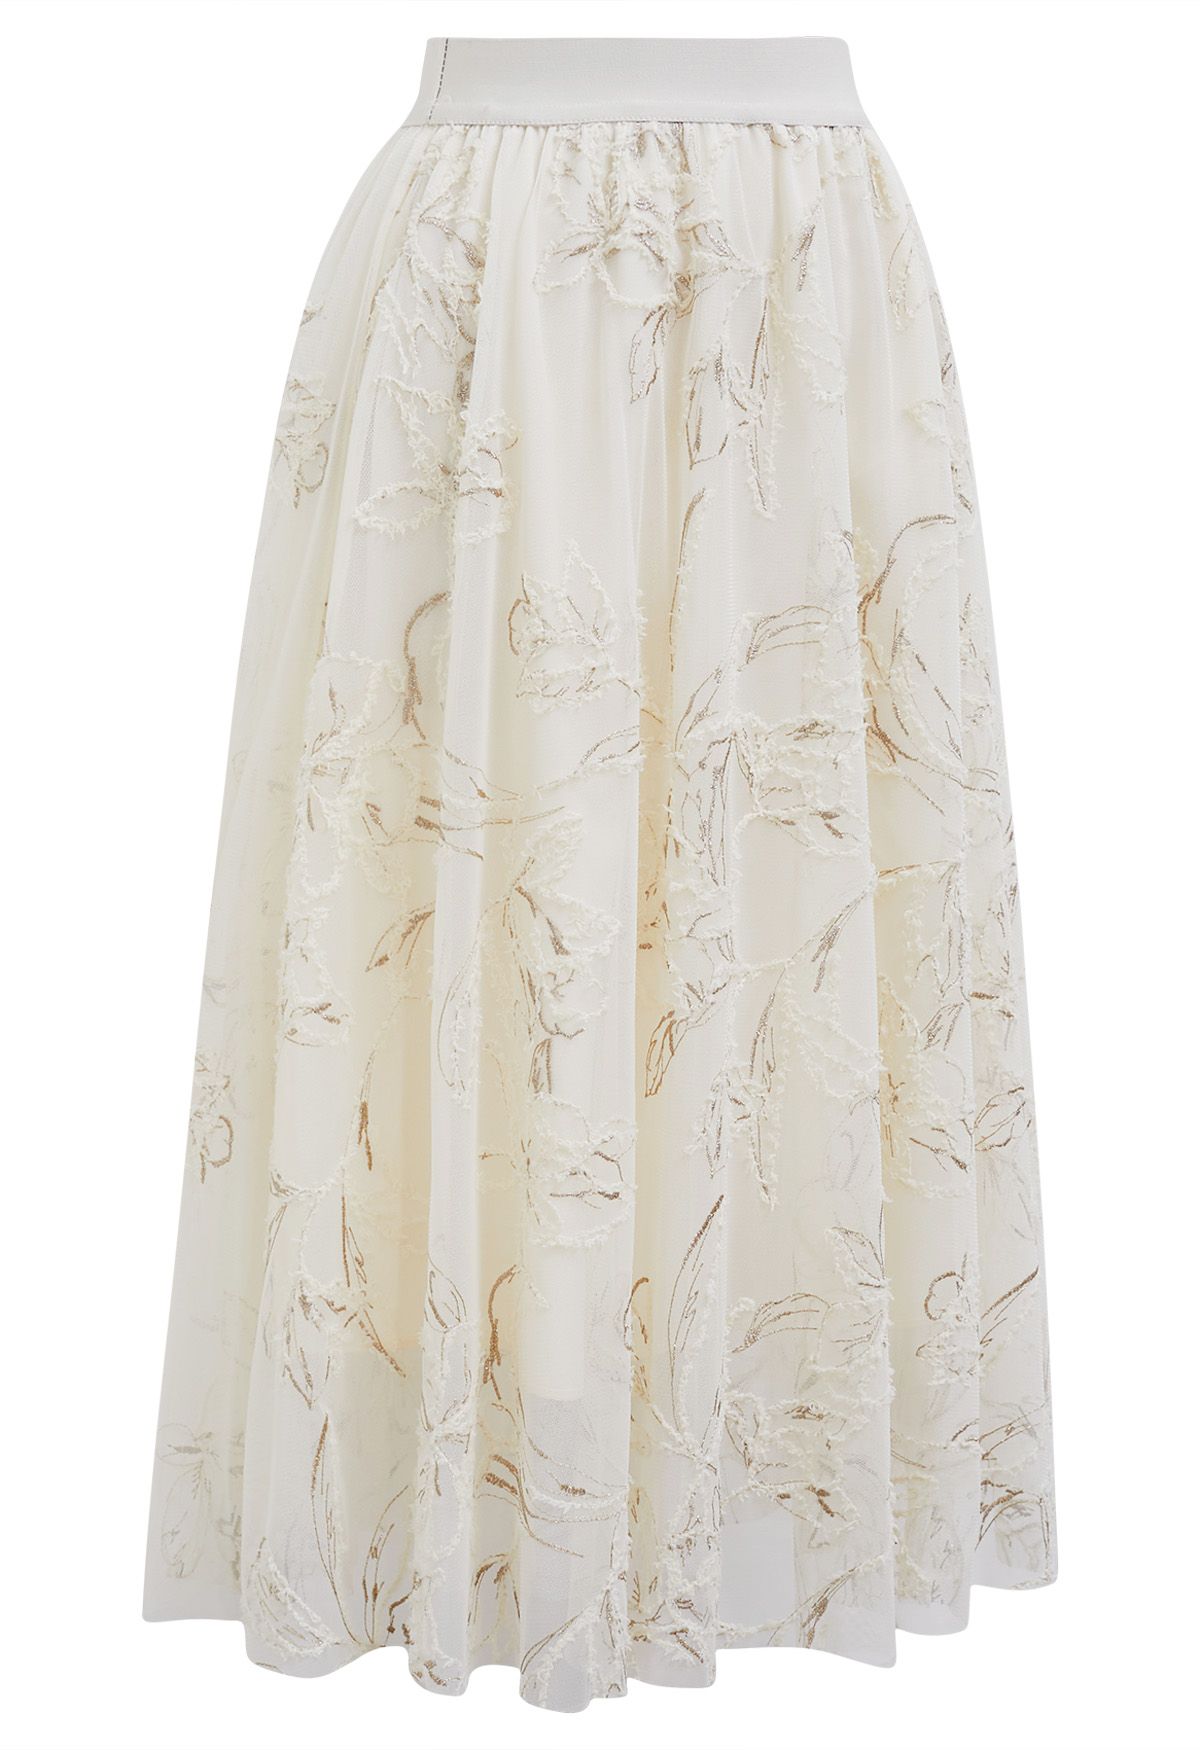 Metallic Thread Fuzzy Floral Mesh Midi Skirt in Cream